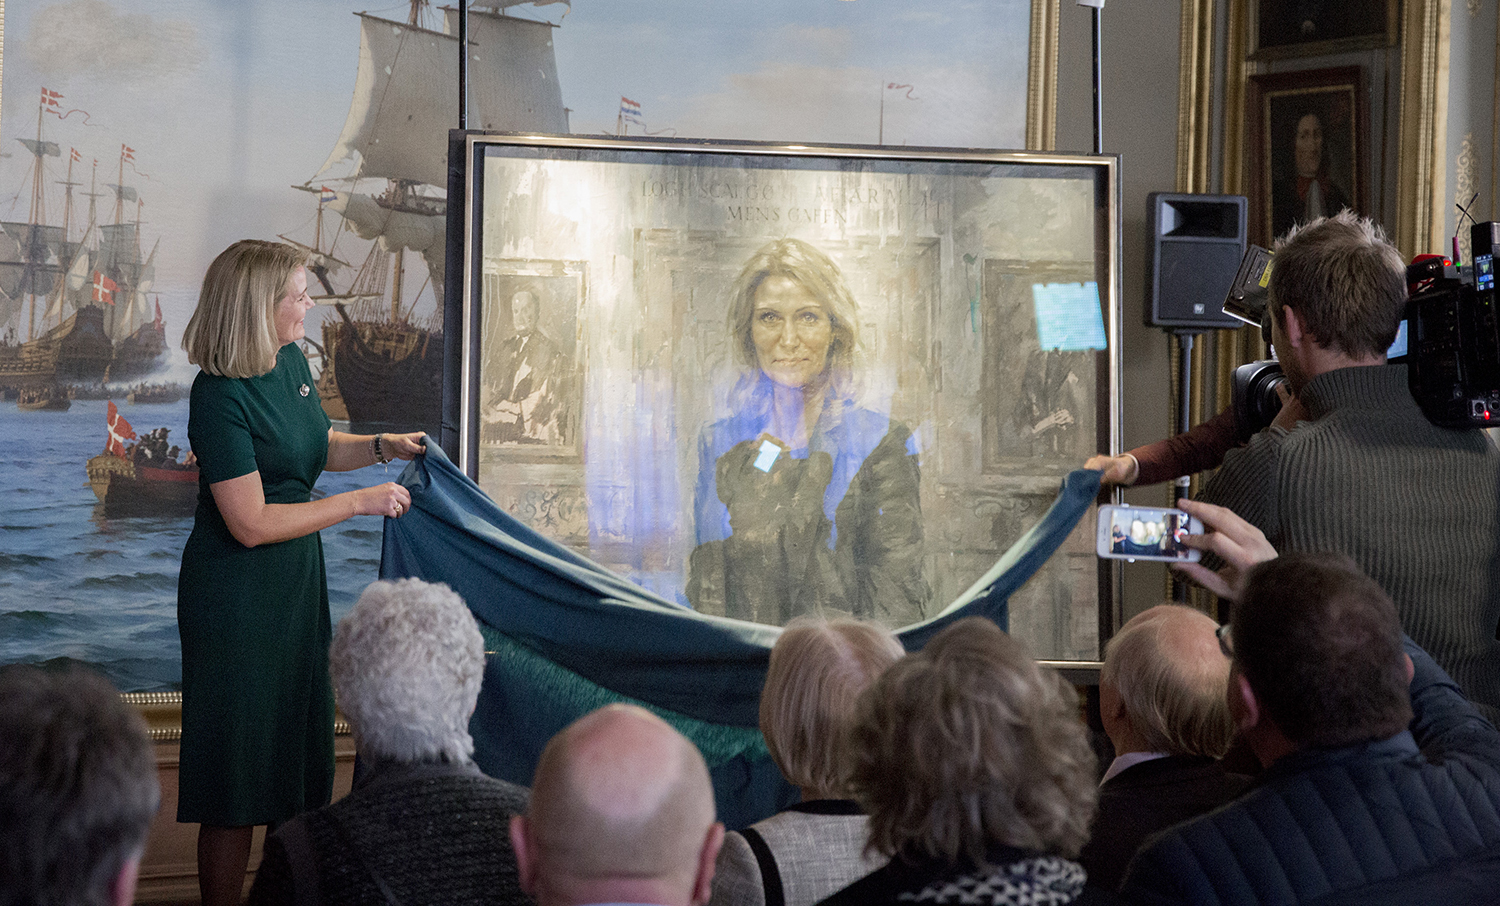 Helle Thorning Schmidt unveling her portrait